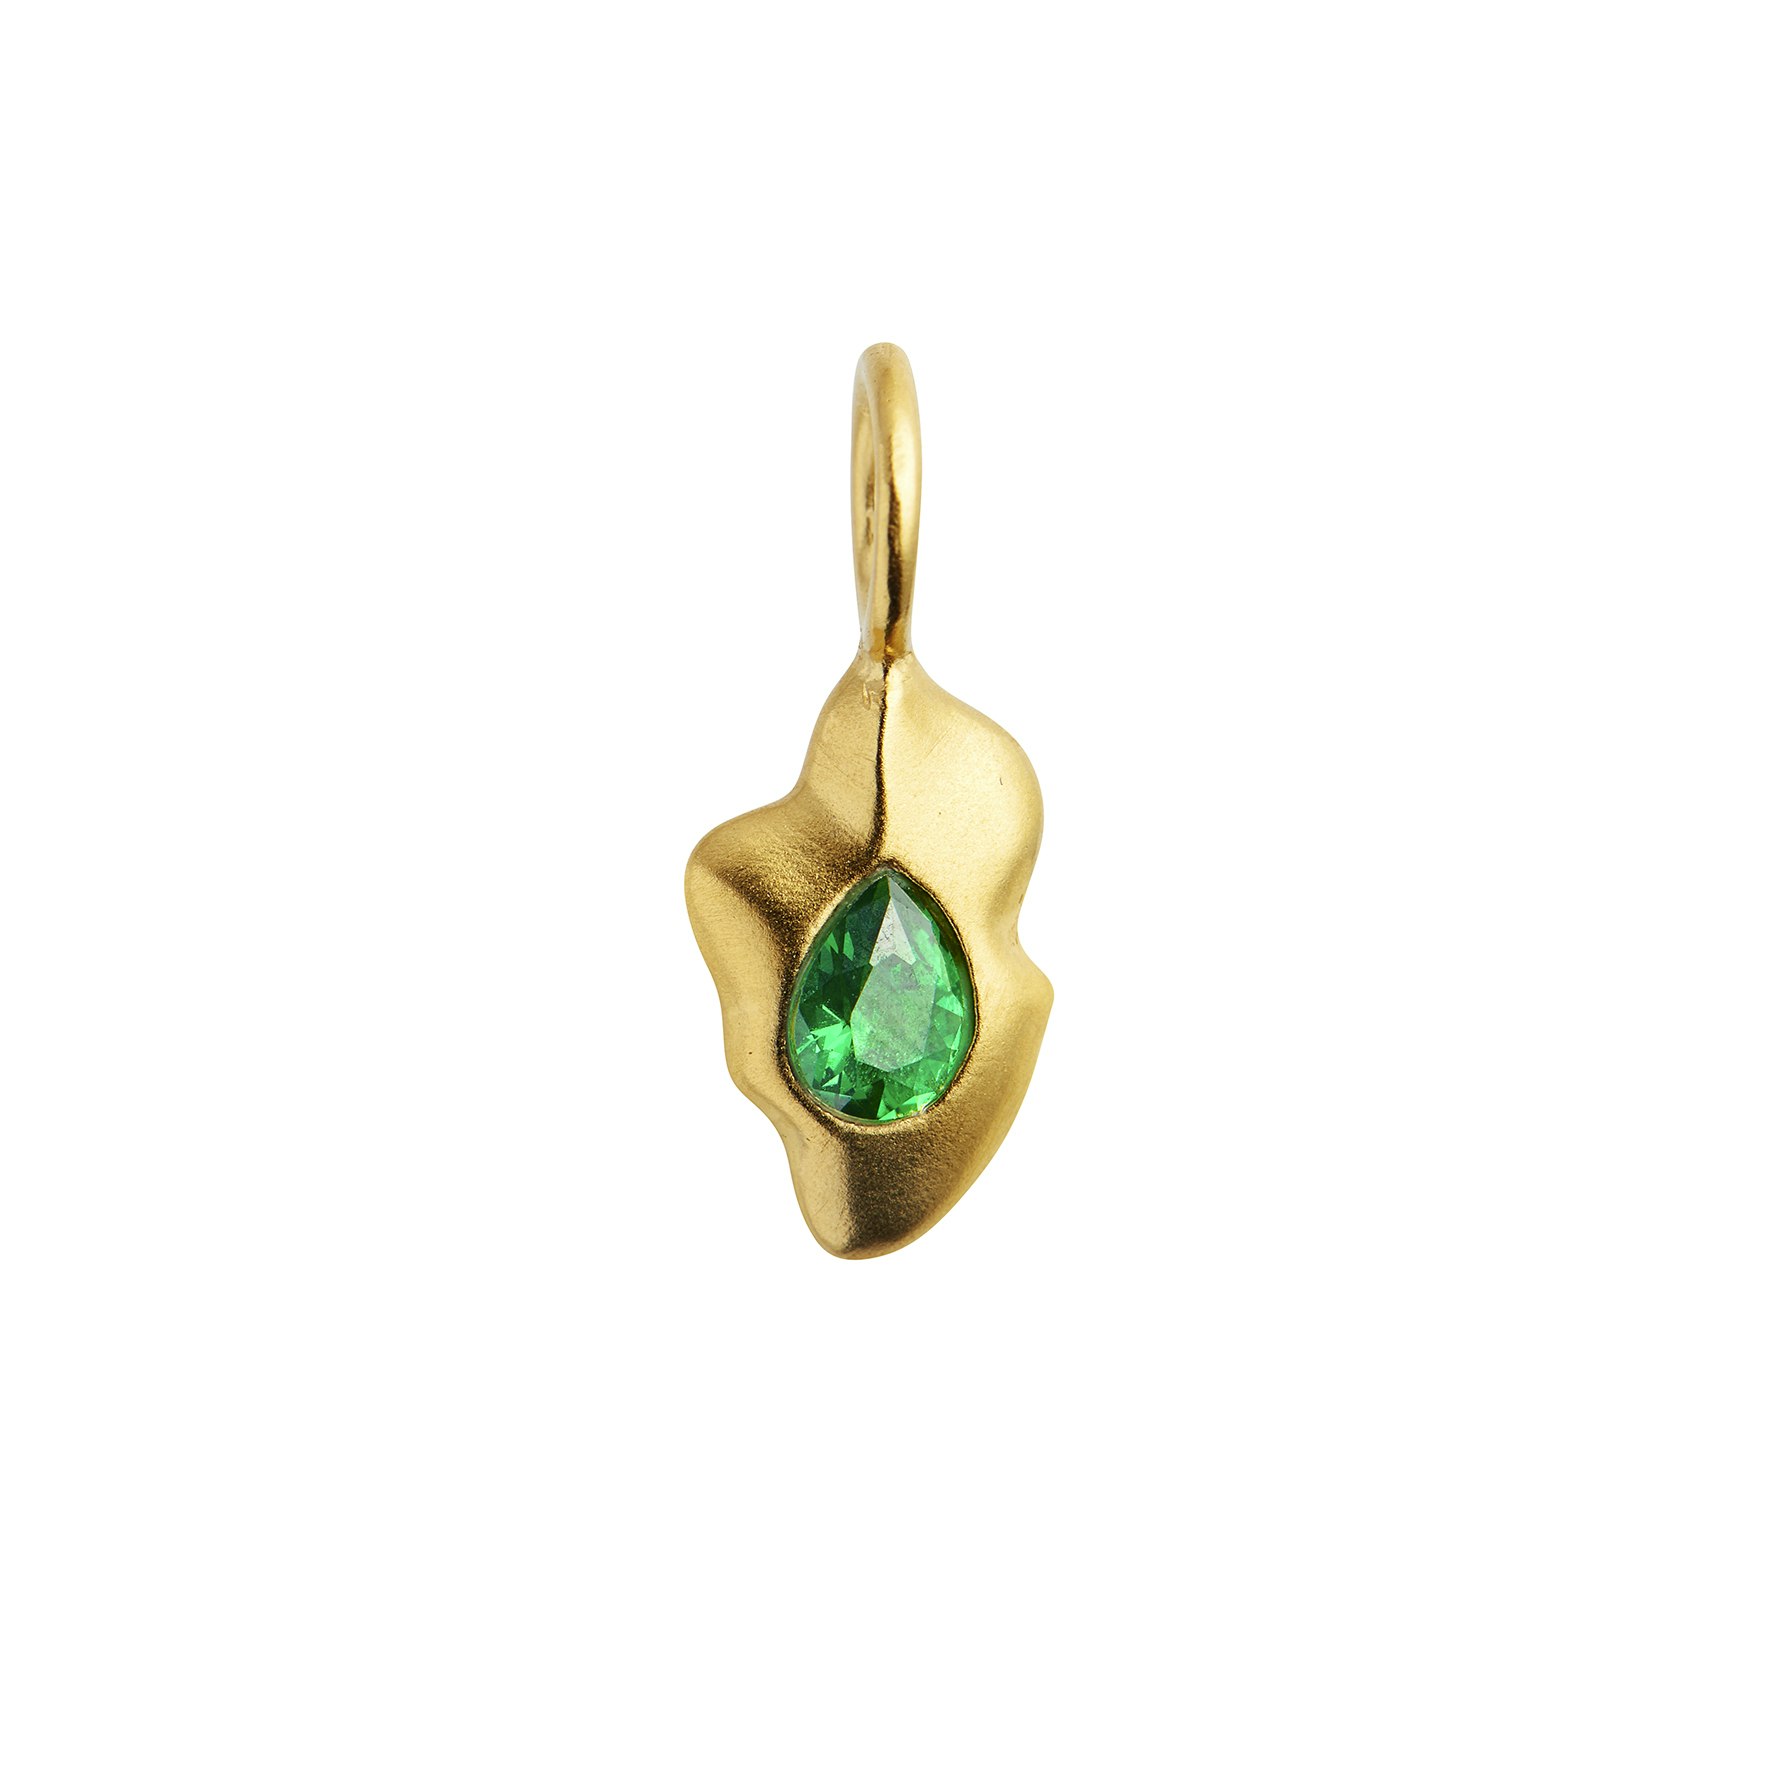 Glimpse Pendant With Green Stone fra STINE A Jewelry i Forgyldt-Sølv Sterling 925